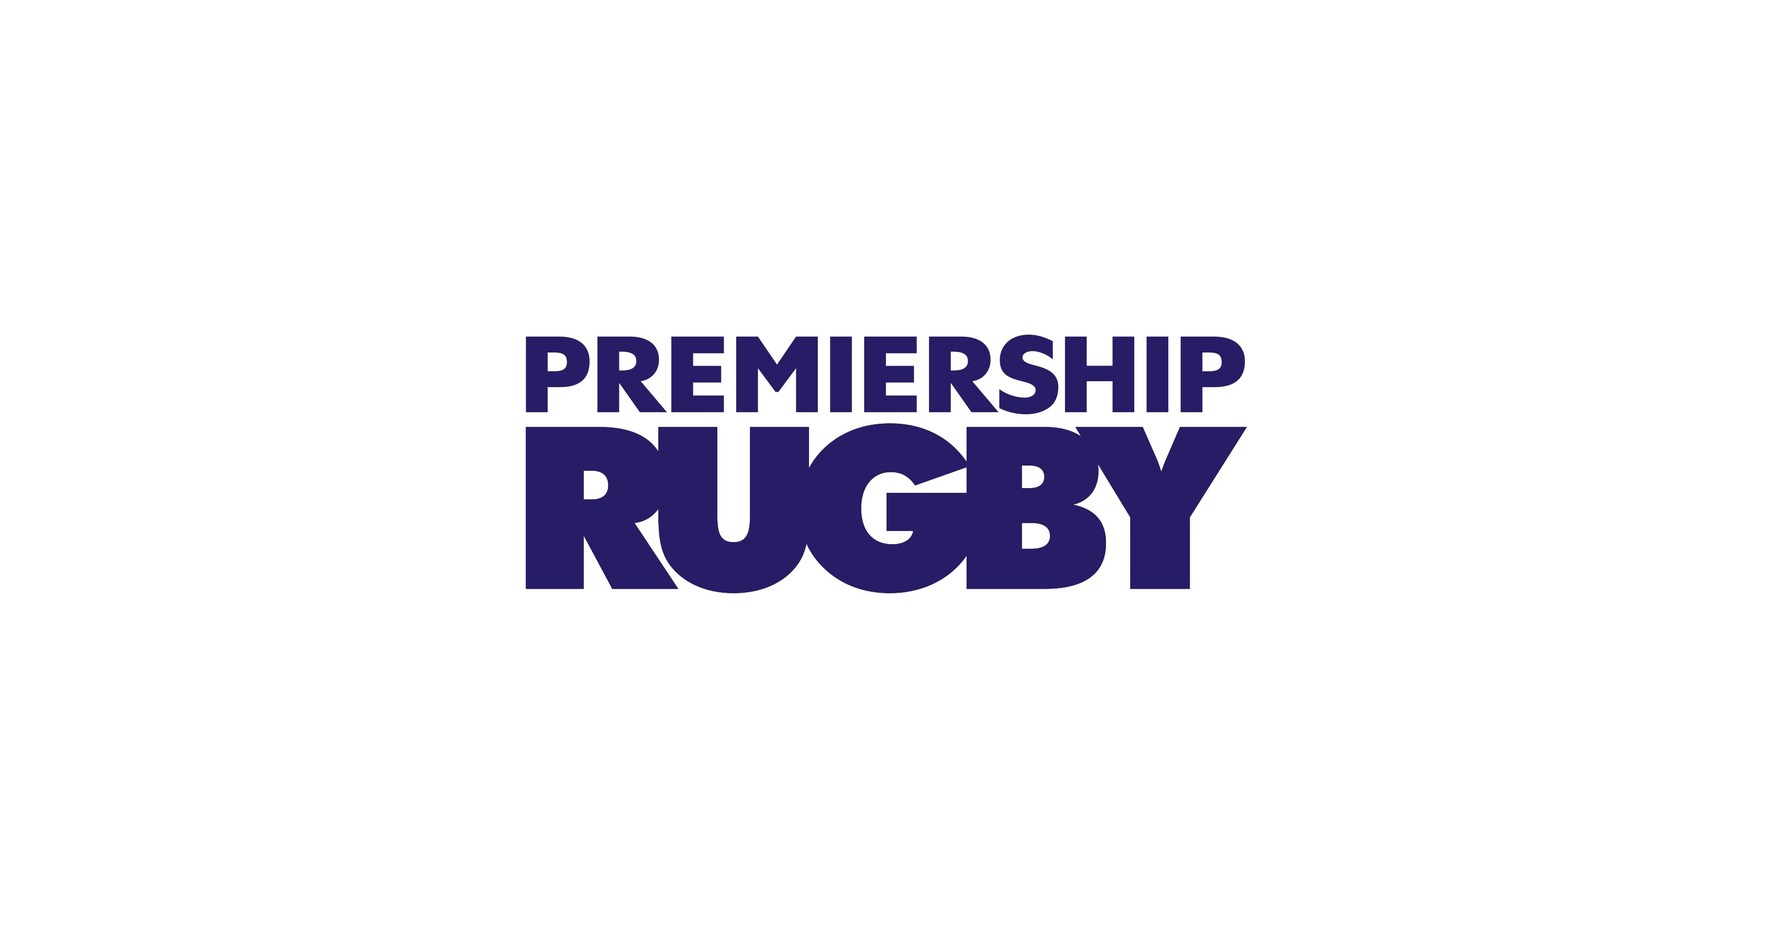 Премьершип. Championship 1972 Rugby logo. Rugby TV ge logo.